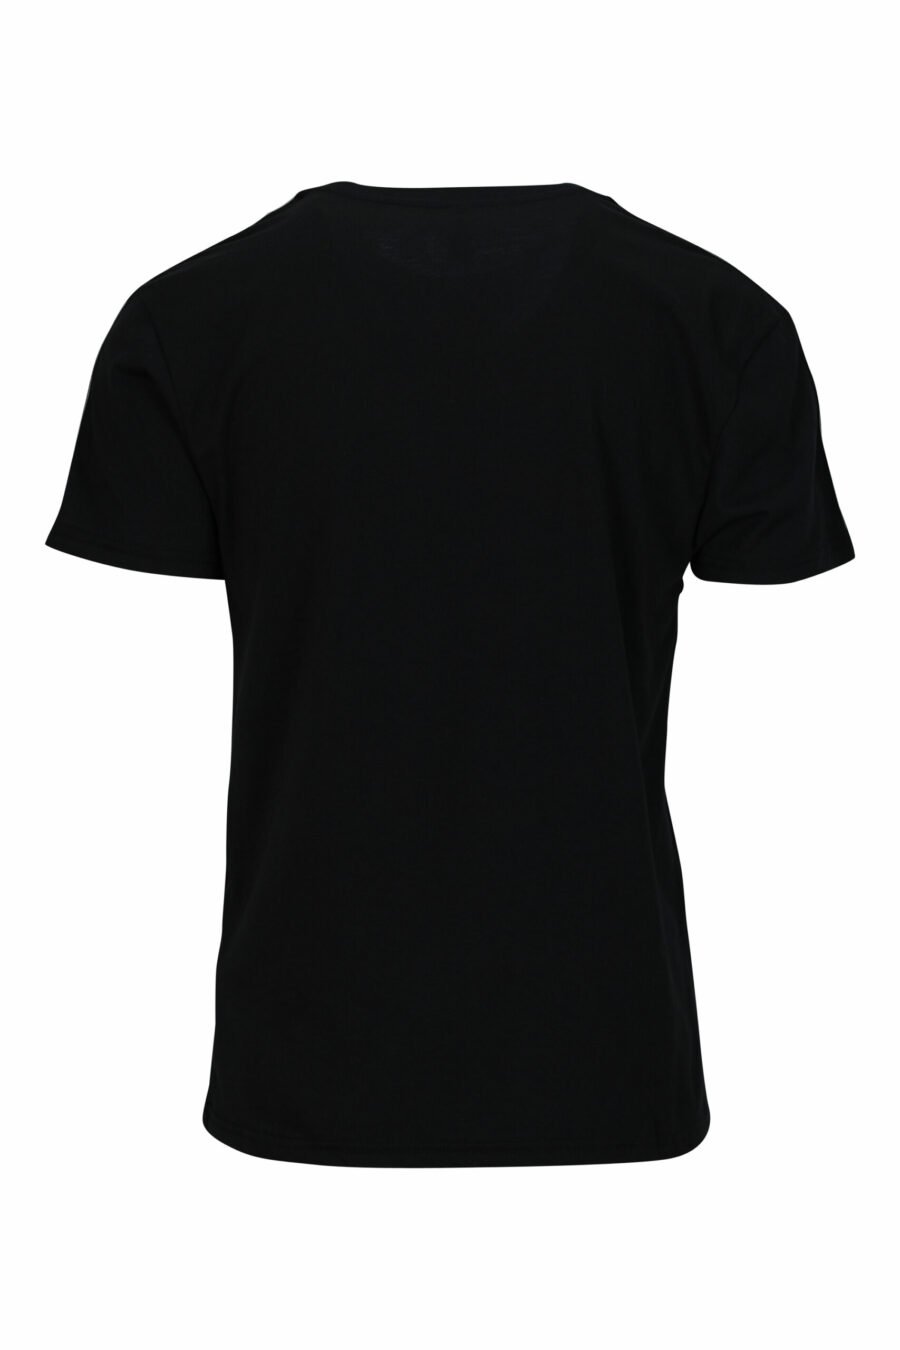 T-shirt preta com mini-logotipo em fita - 667113602967 1 à escala